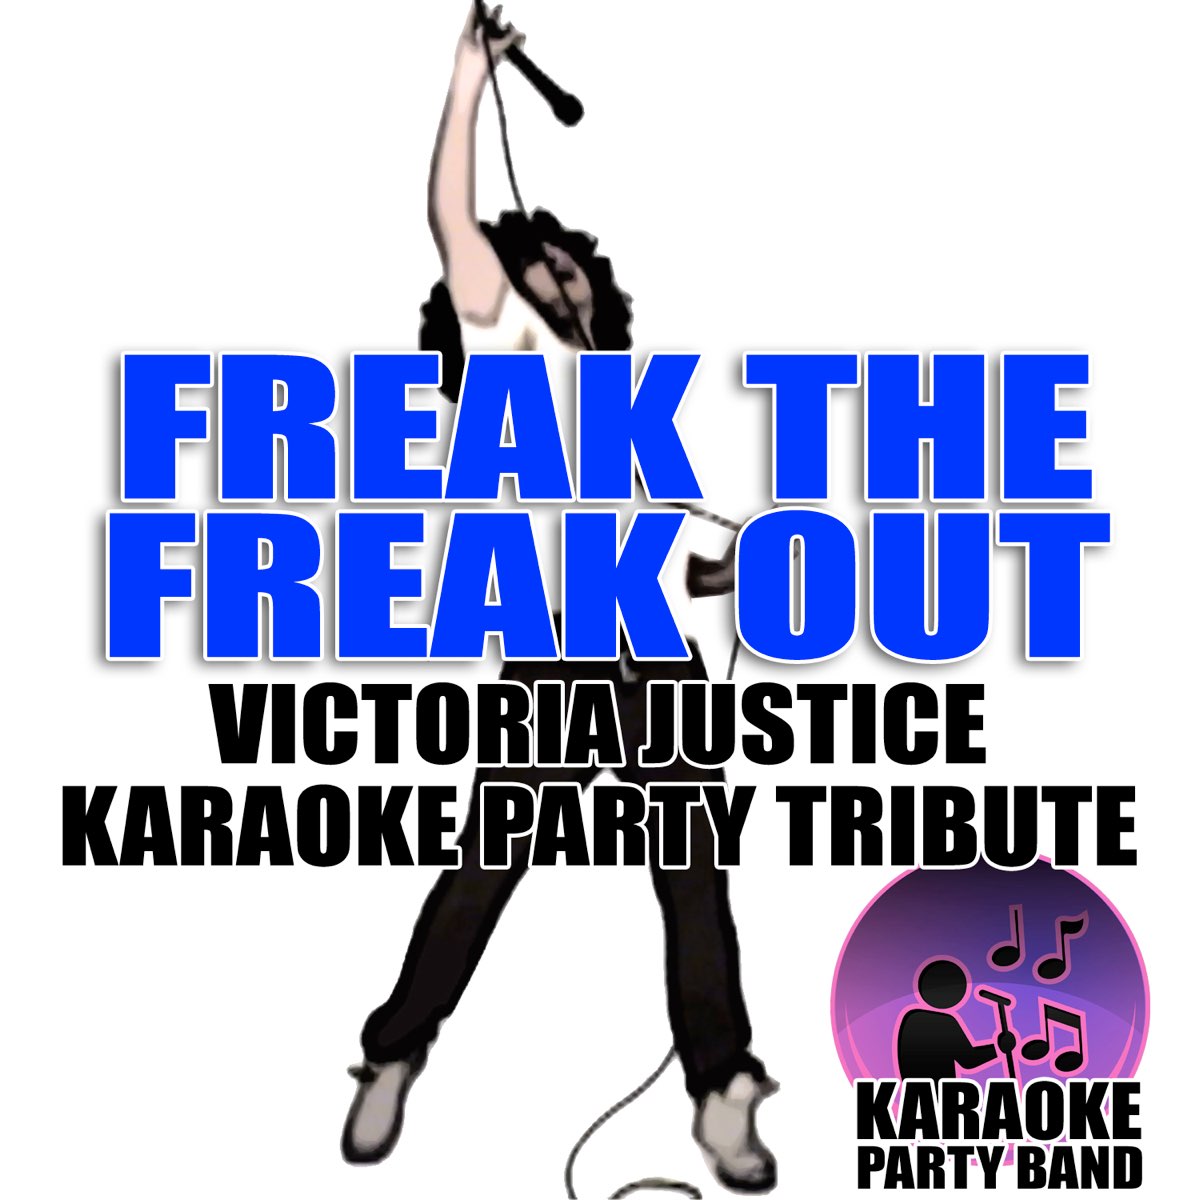 Karaoke Party Bandの Freak The Freak Out Victoria Justice Karaoke Party Tribute Single をapple Musicで